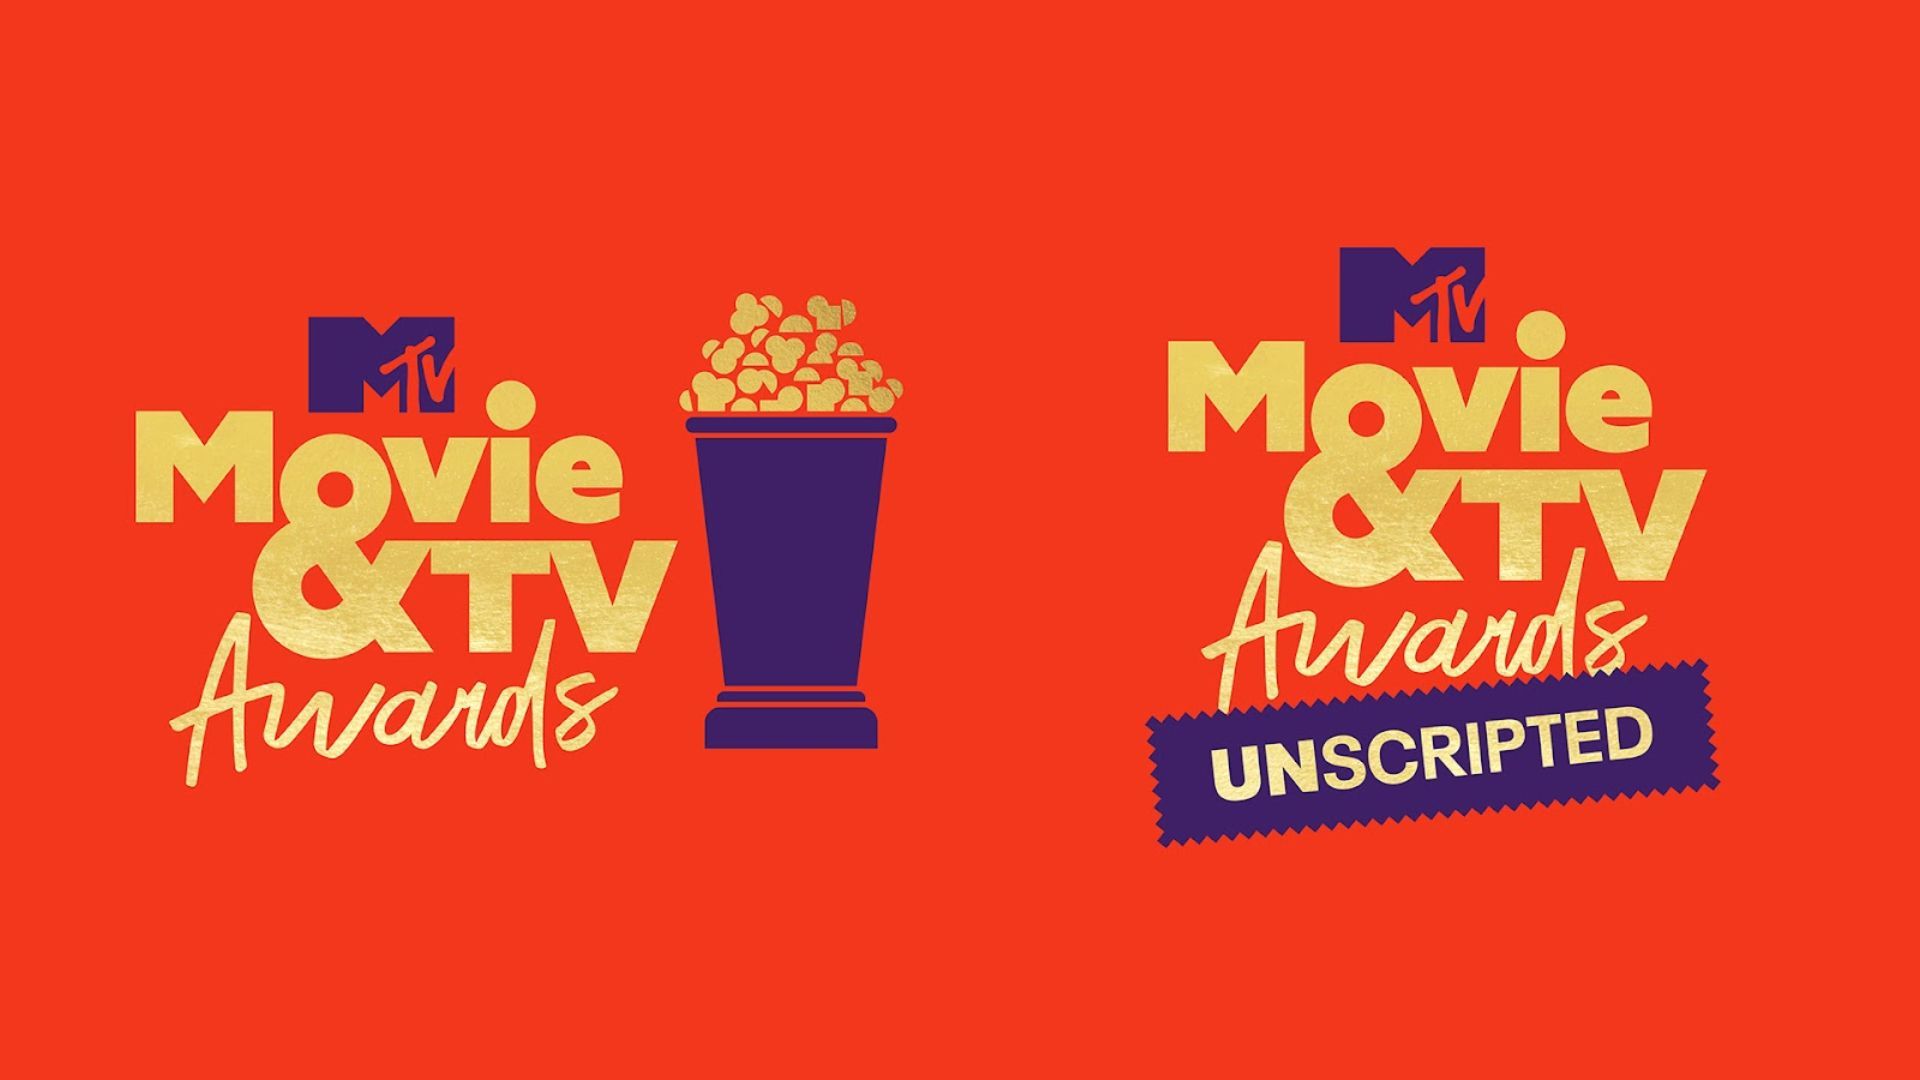 MTV Movie and TV Awards nominees